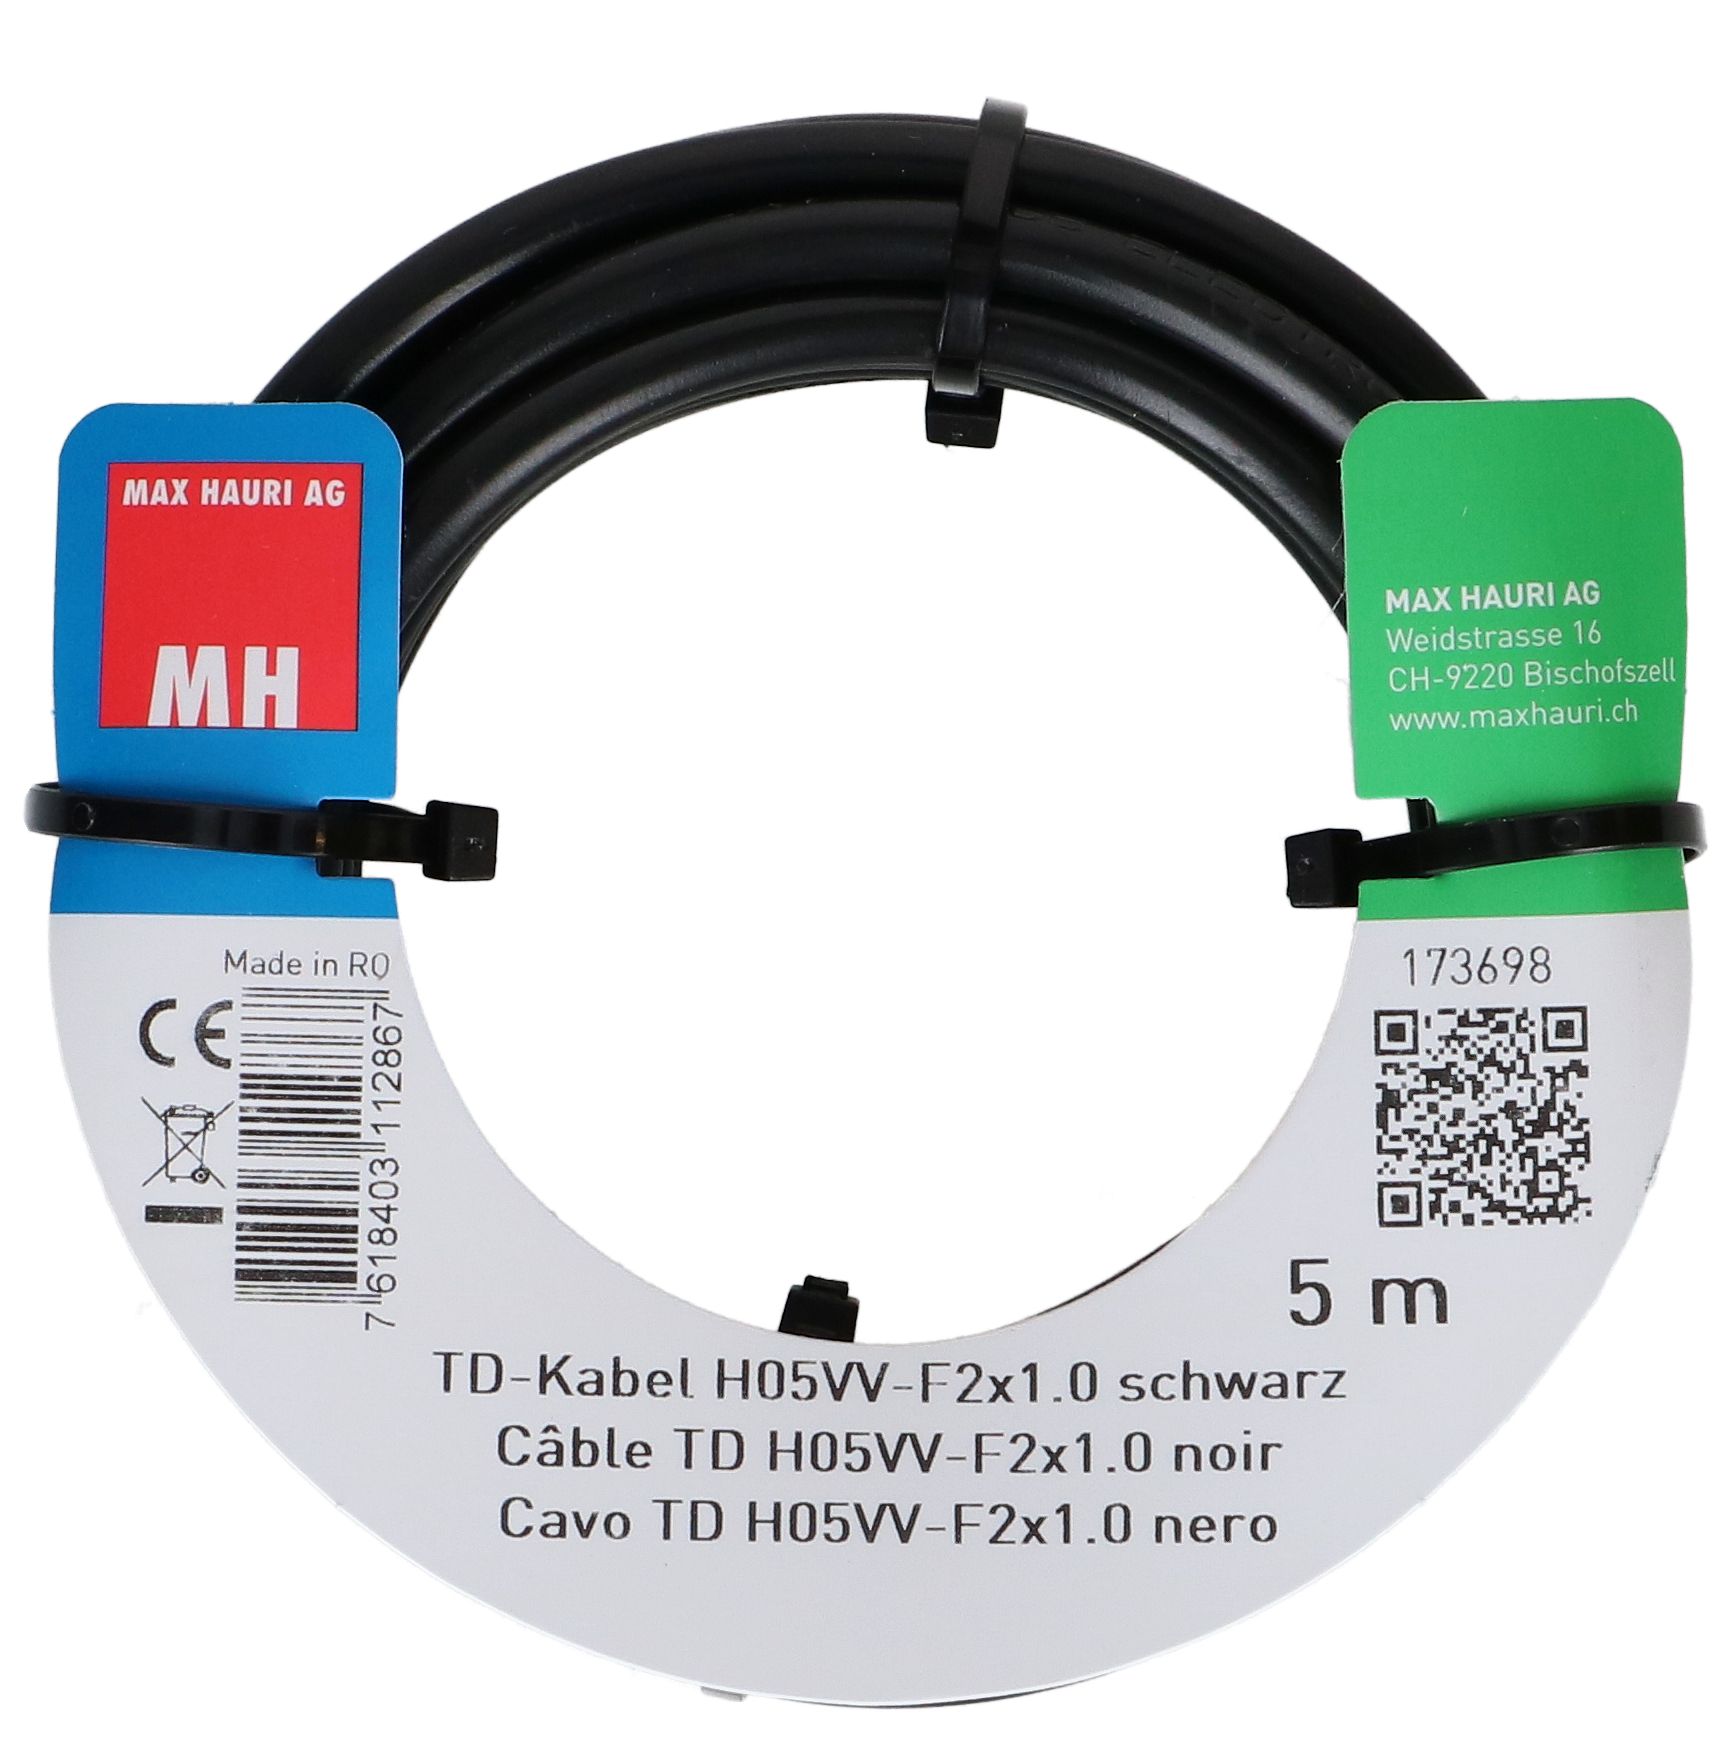 TD-Kabel H05VV-F2X1.0 5m schwarz